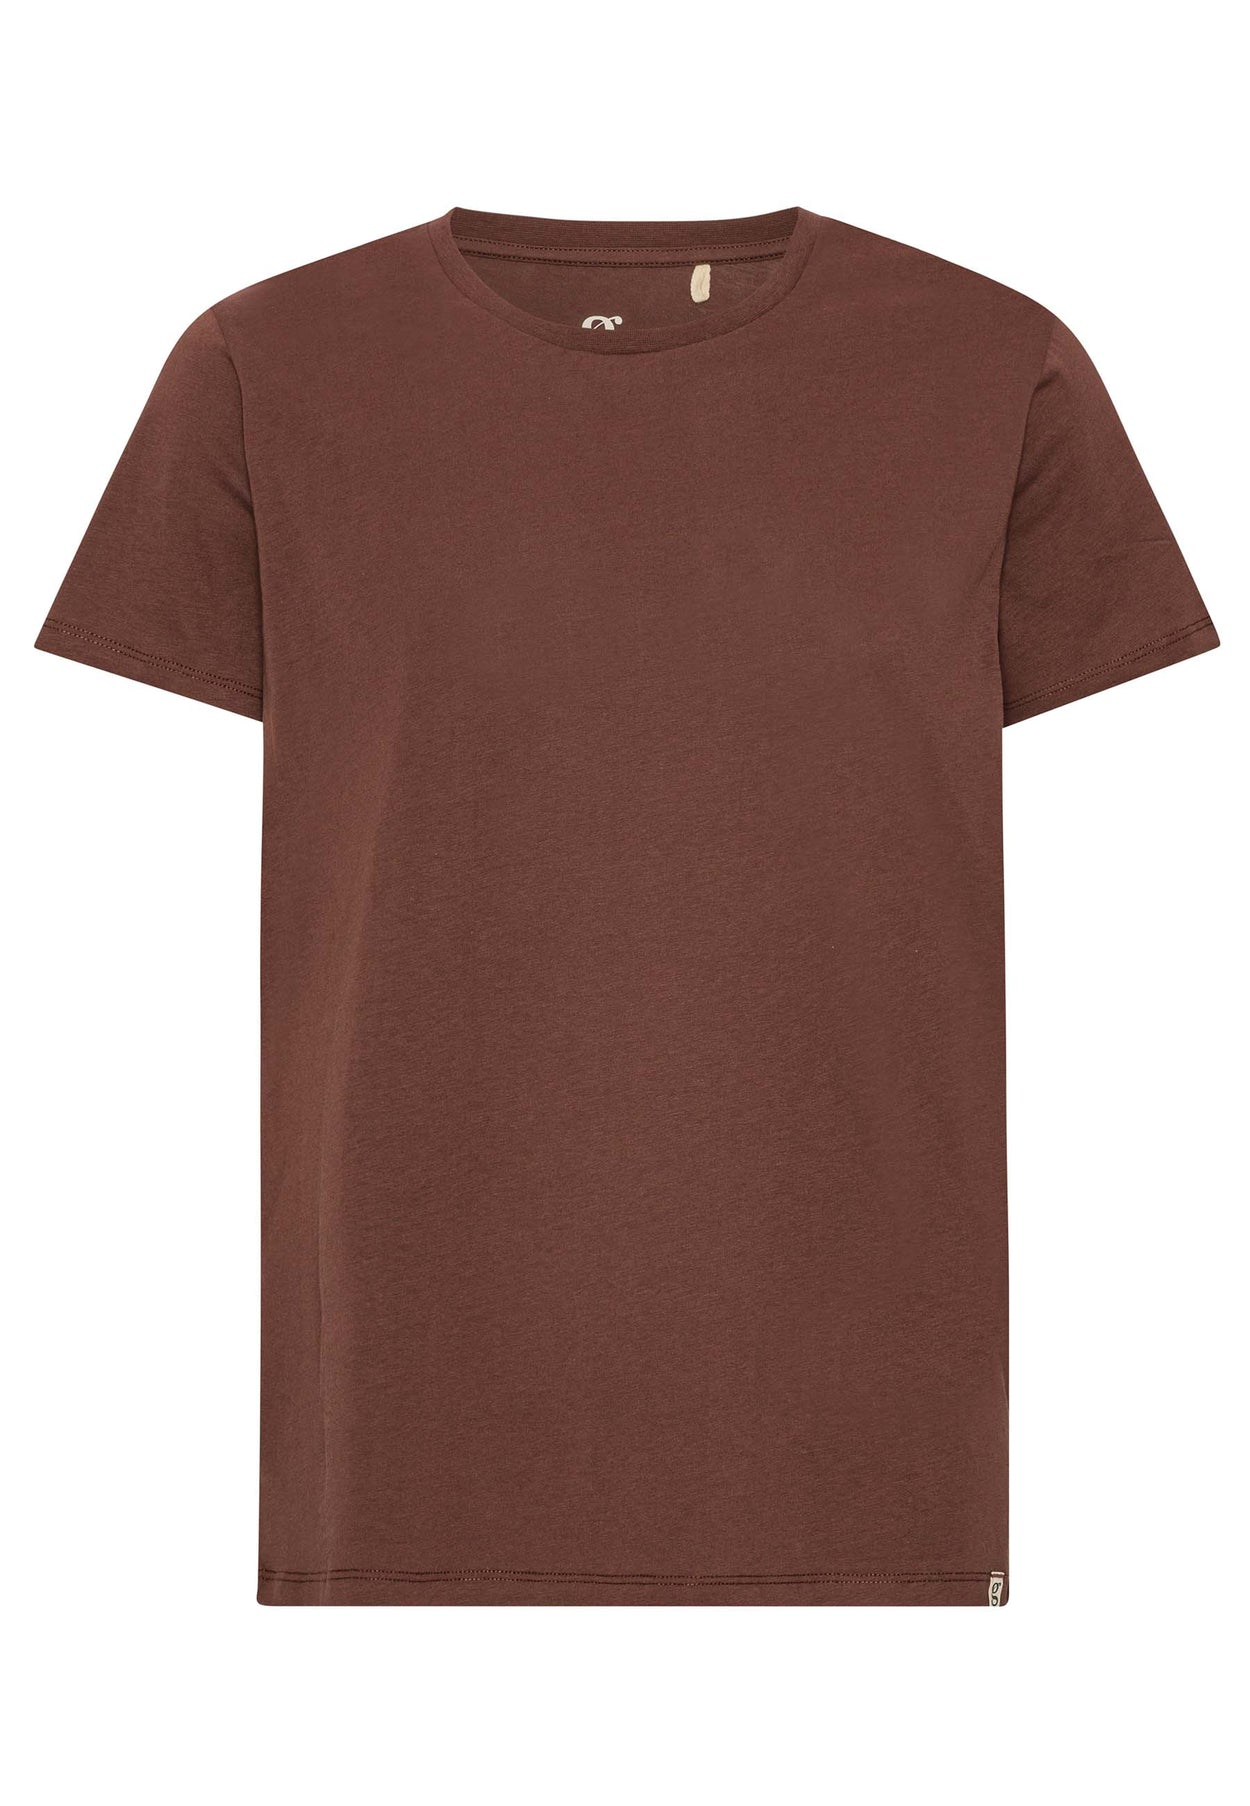 GROBUND Alfie t-shirten - den i chokoladebrun